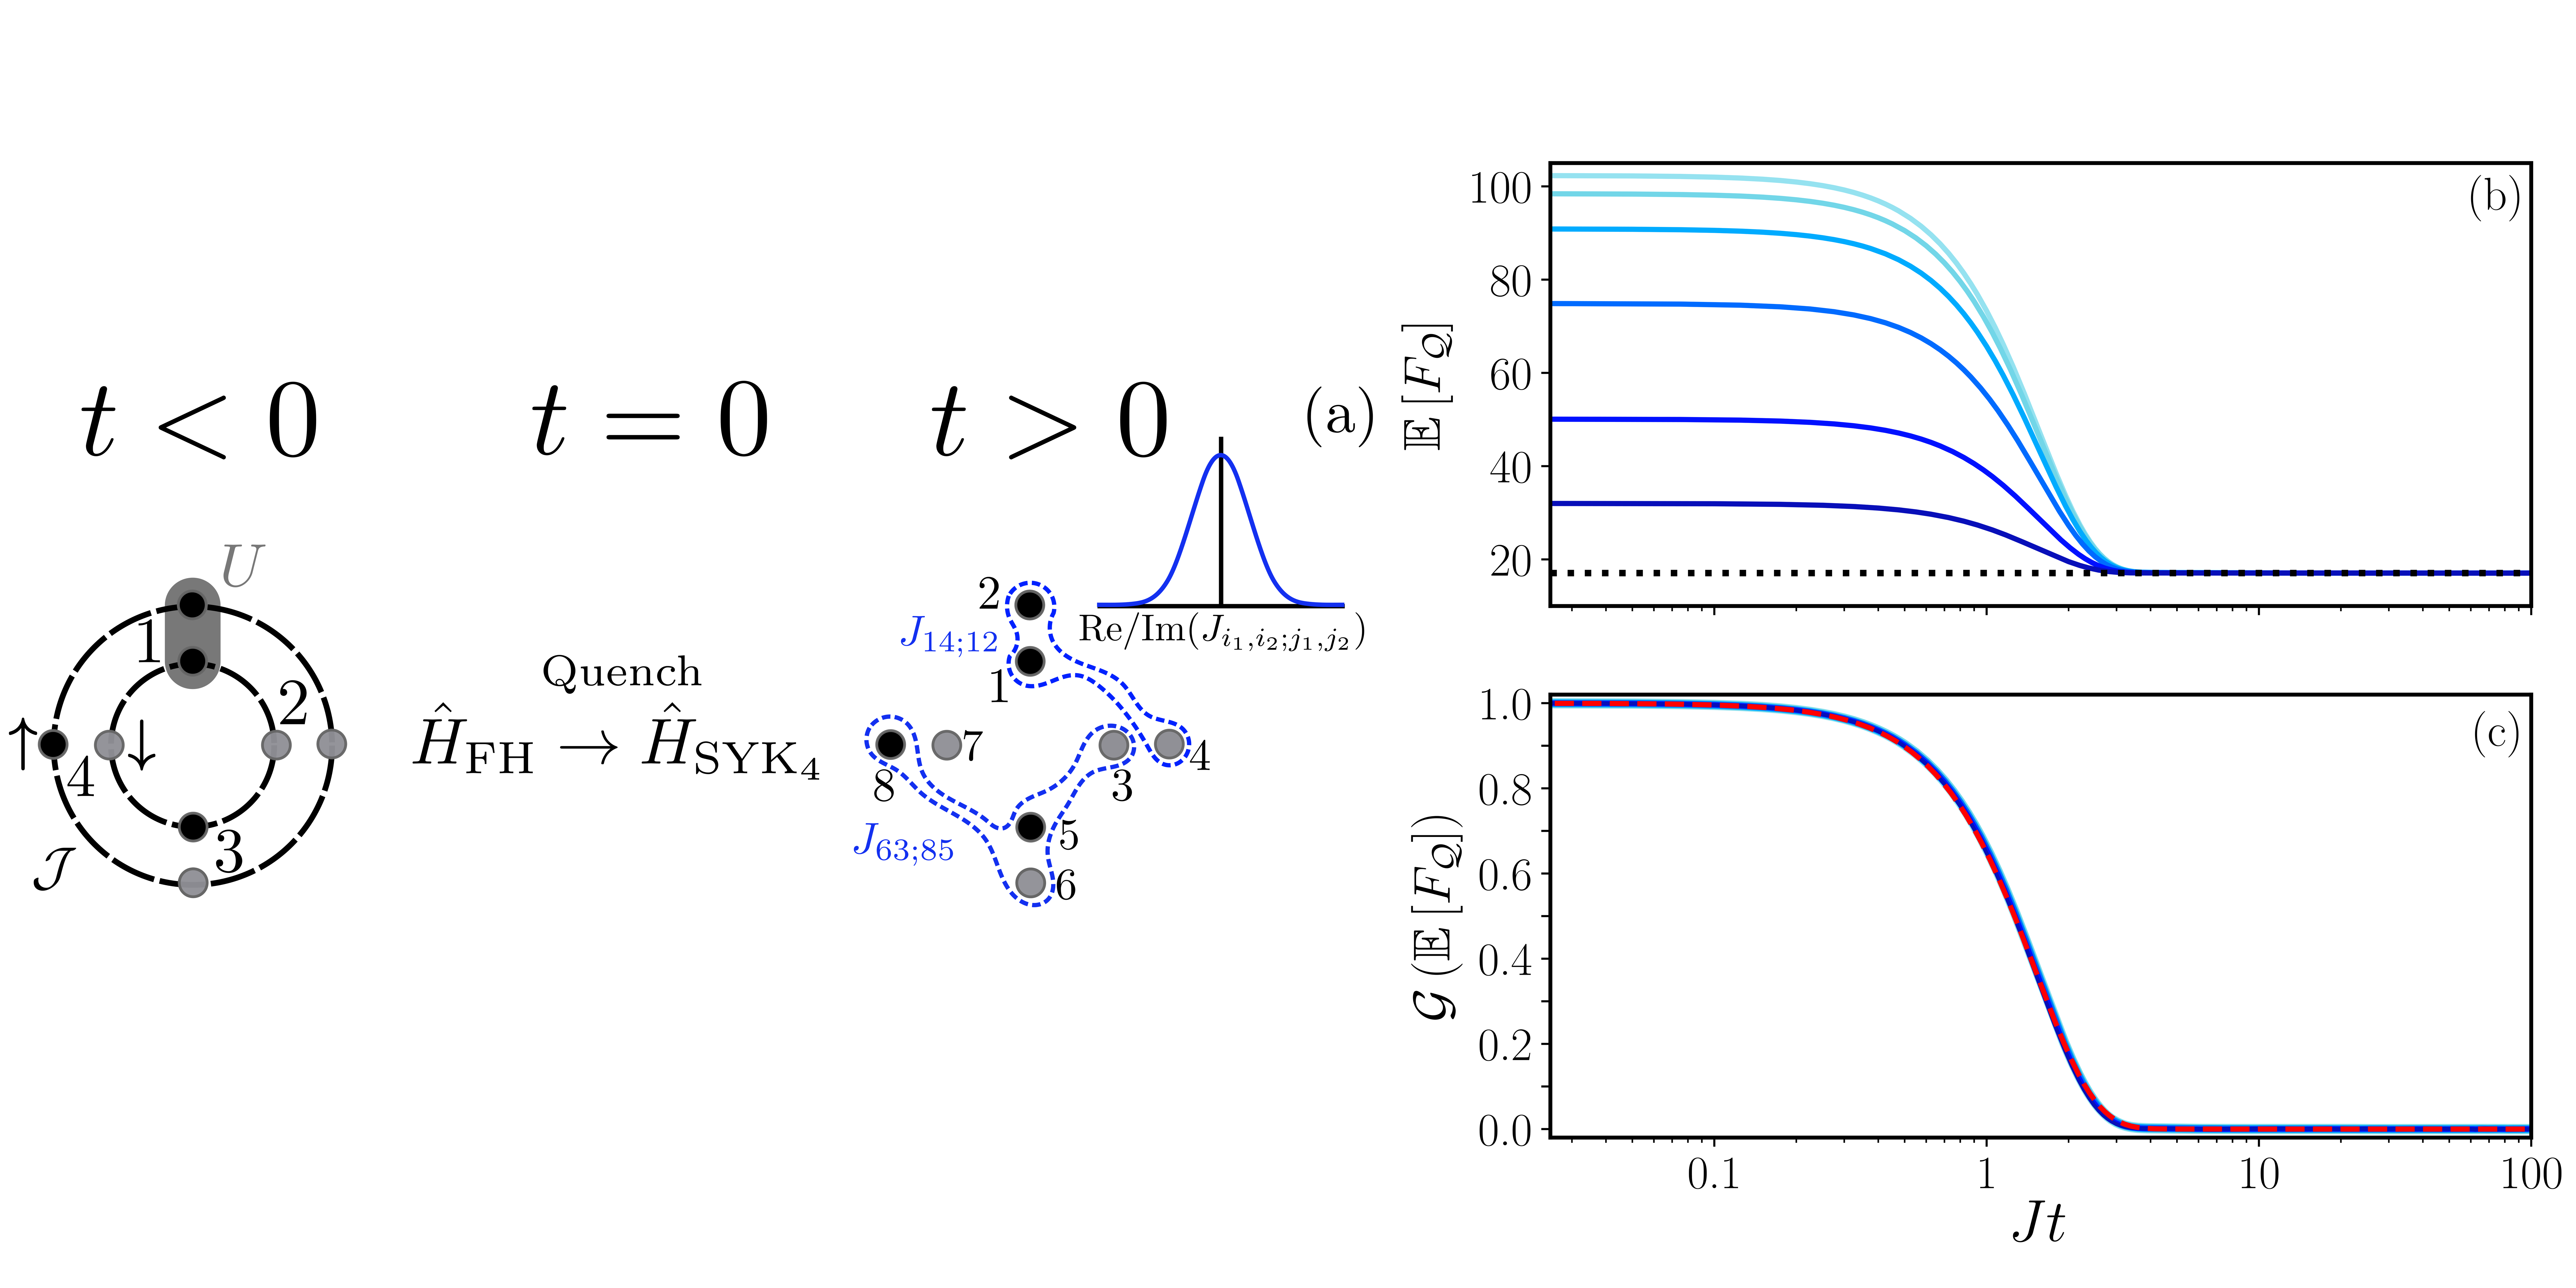 Universal equilibration dynamics of the Sachdev-Ye-Kitaev model